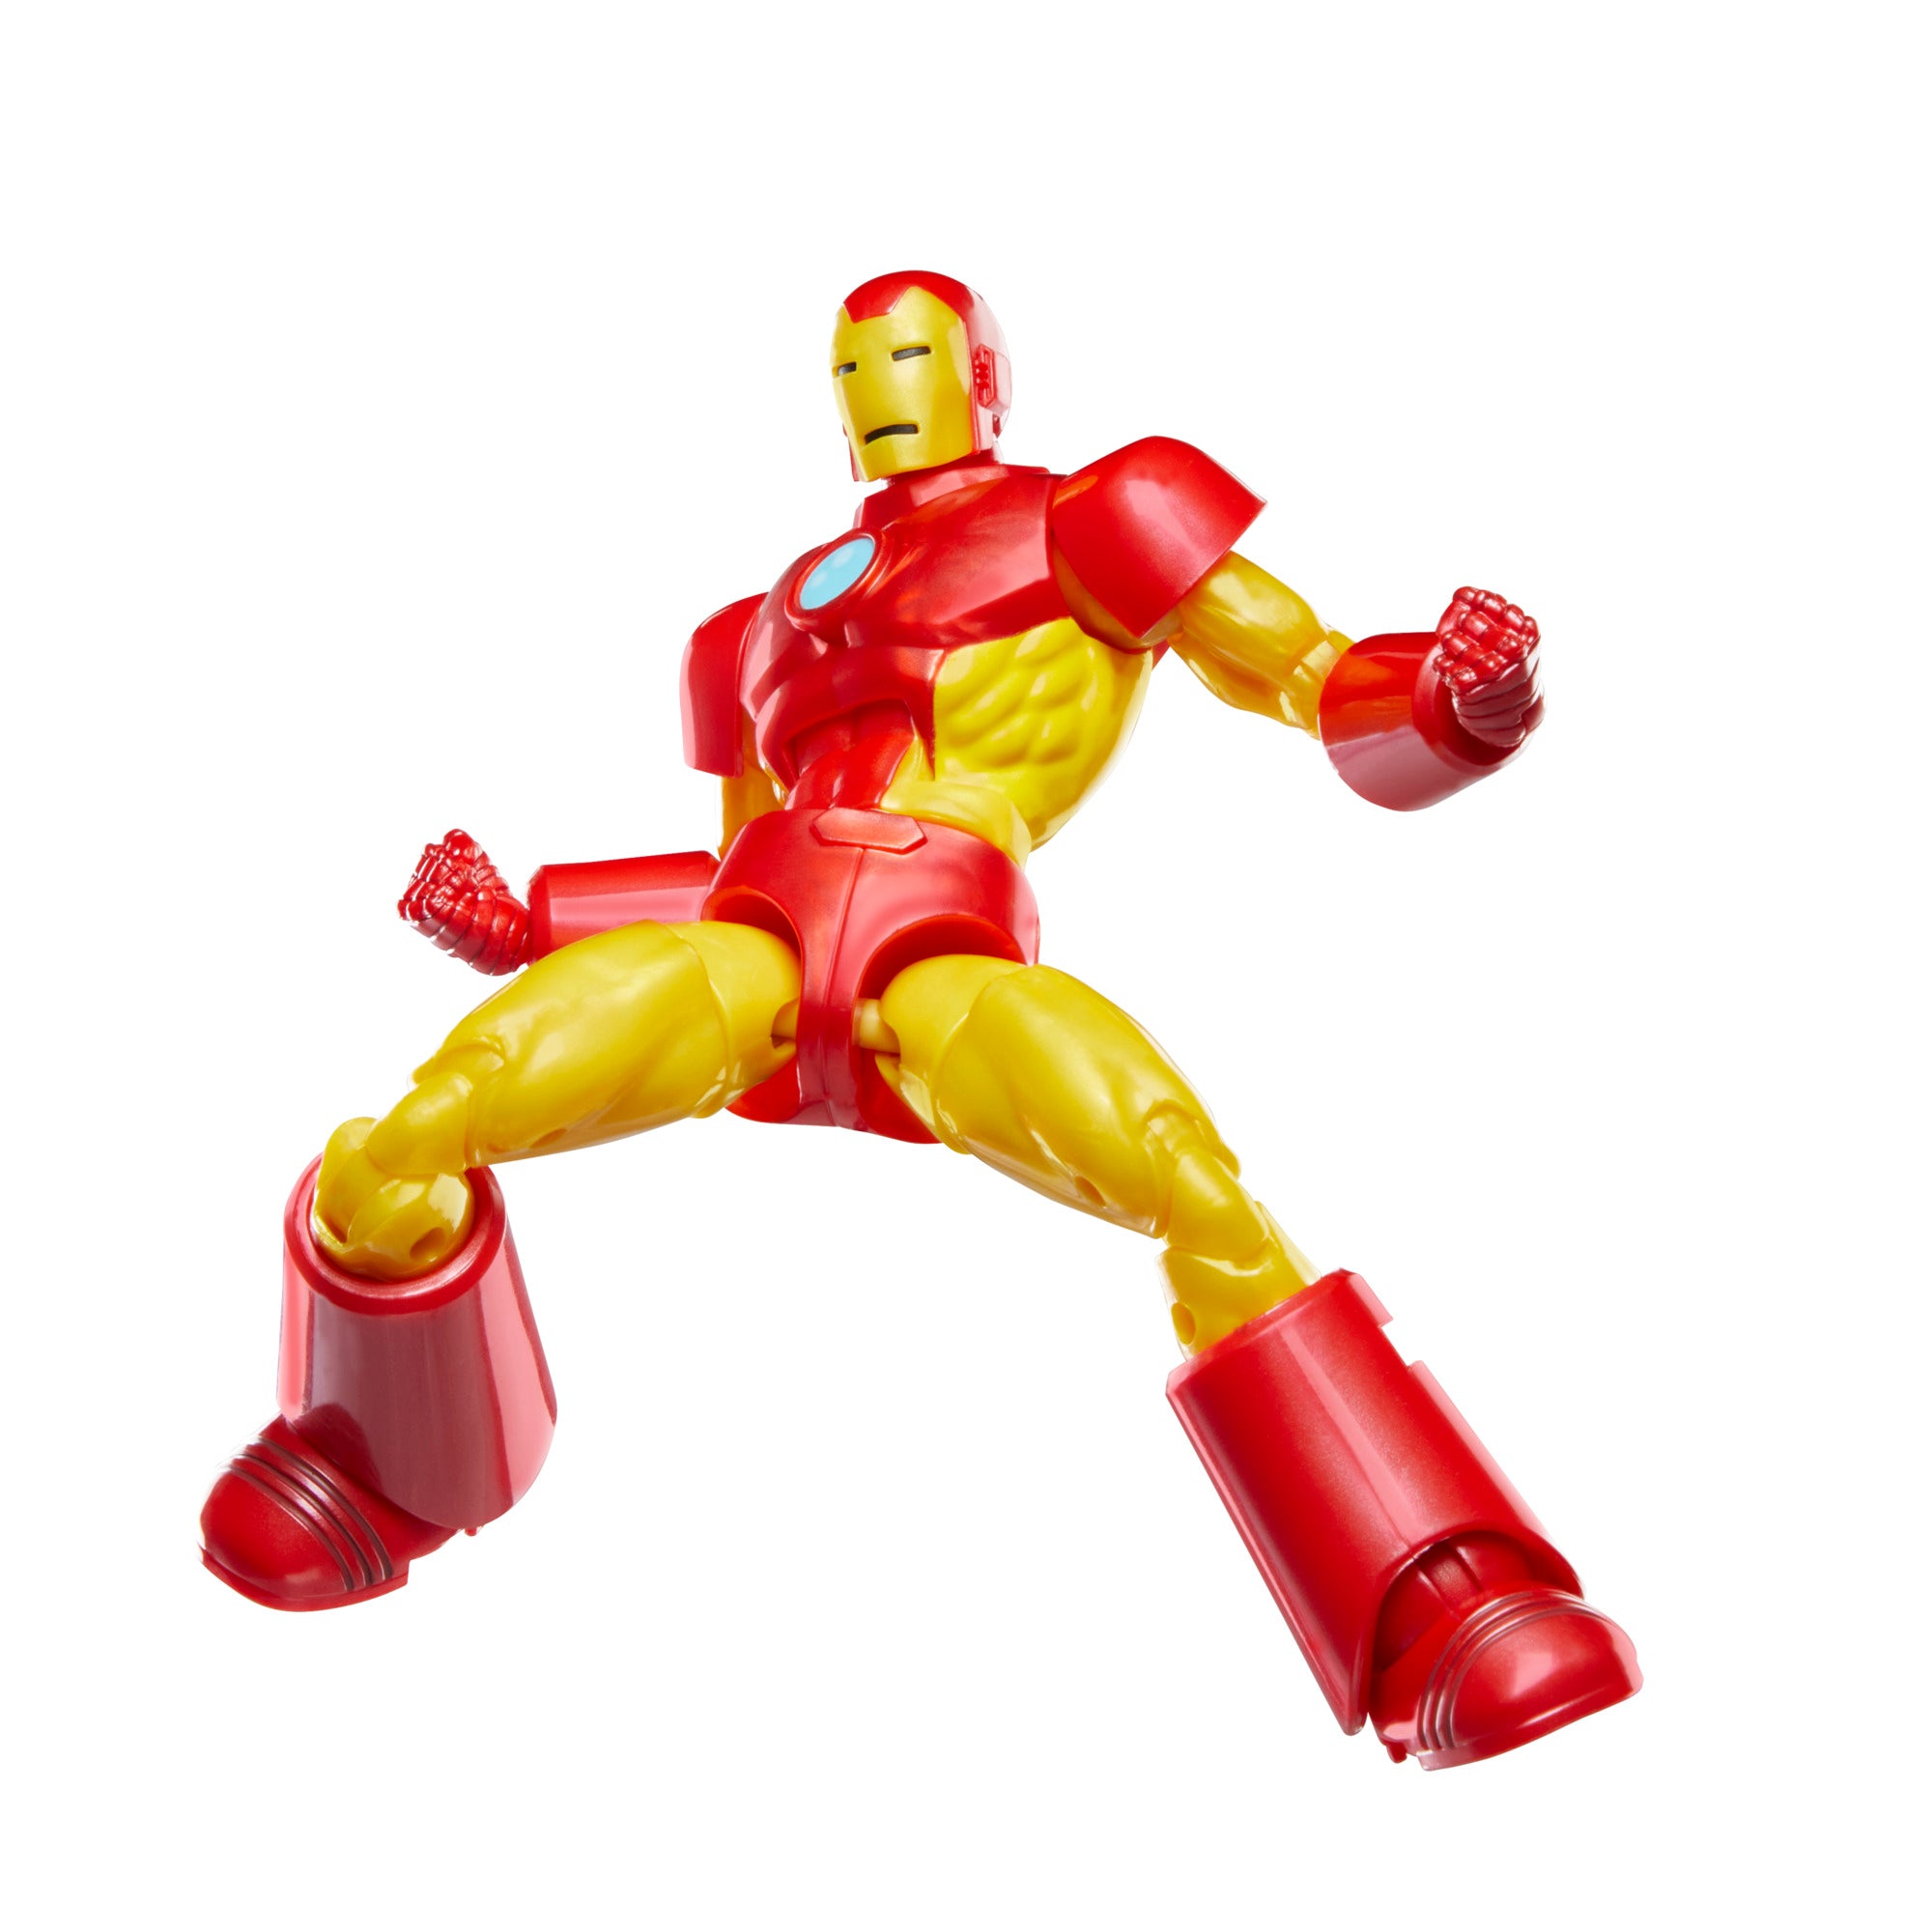 Marvel Legends Classic: Iron Man - Iron Man Modelo 09